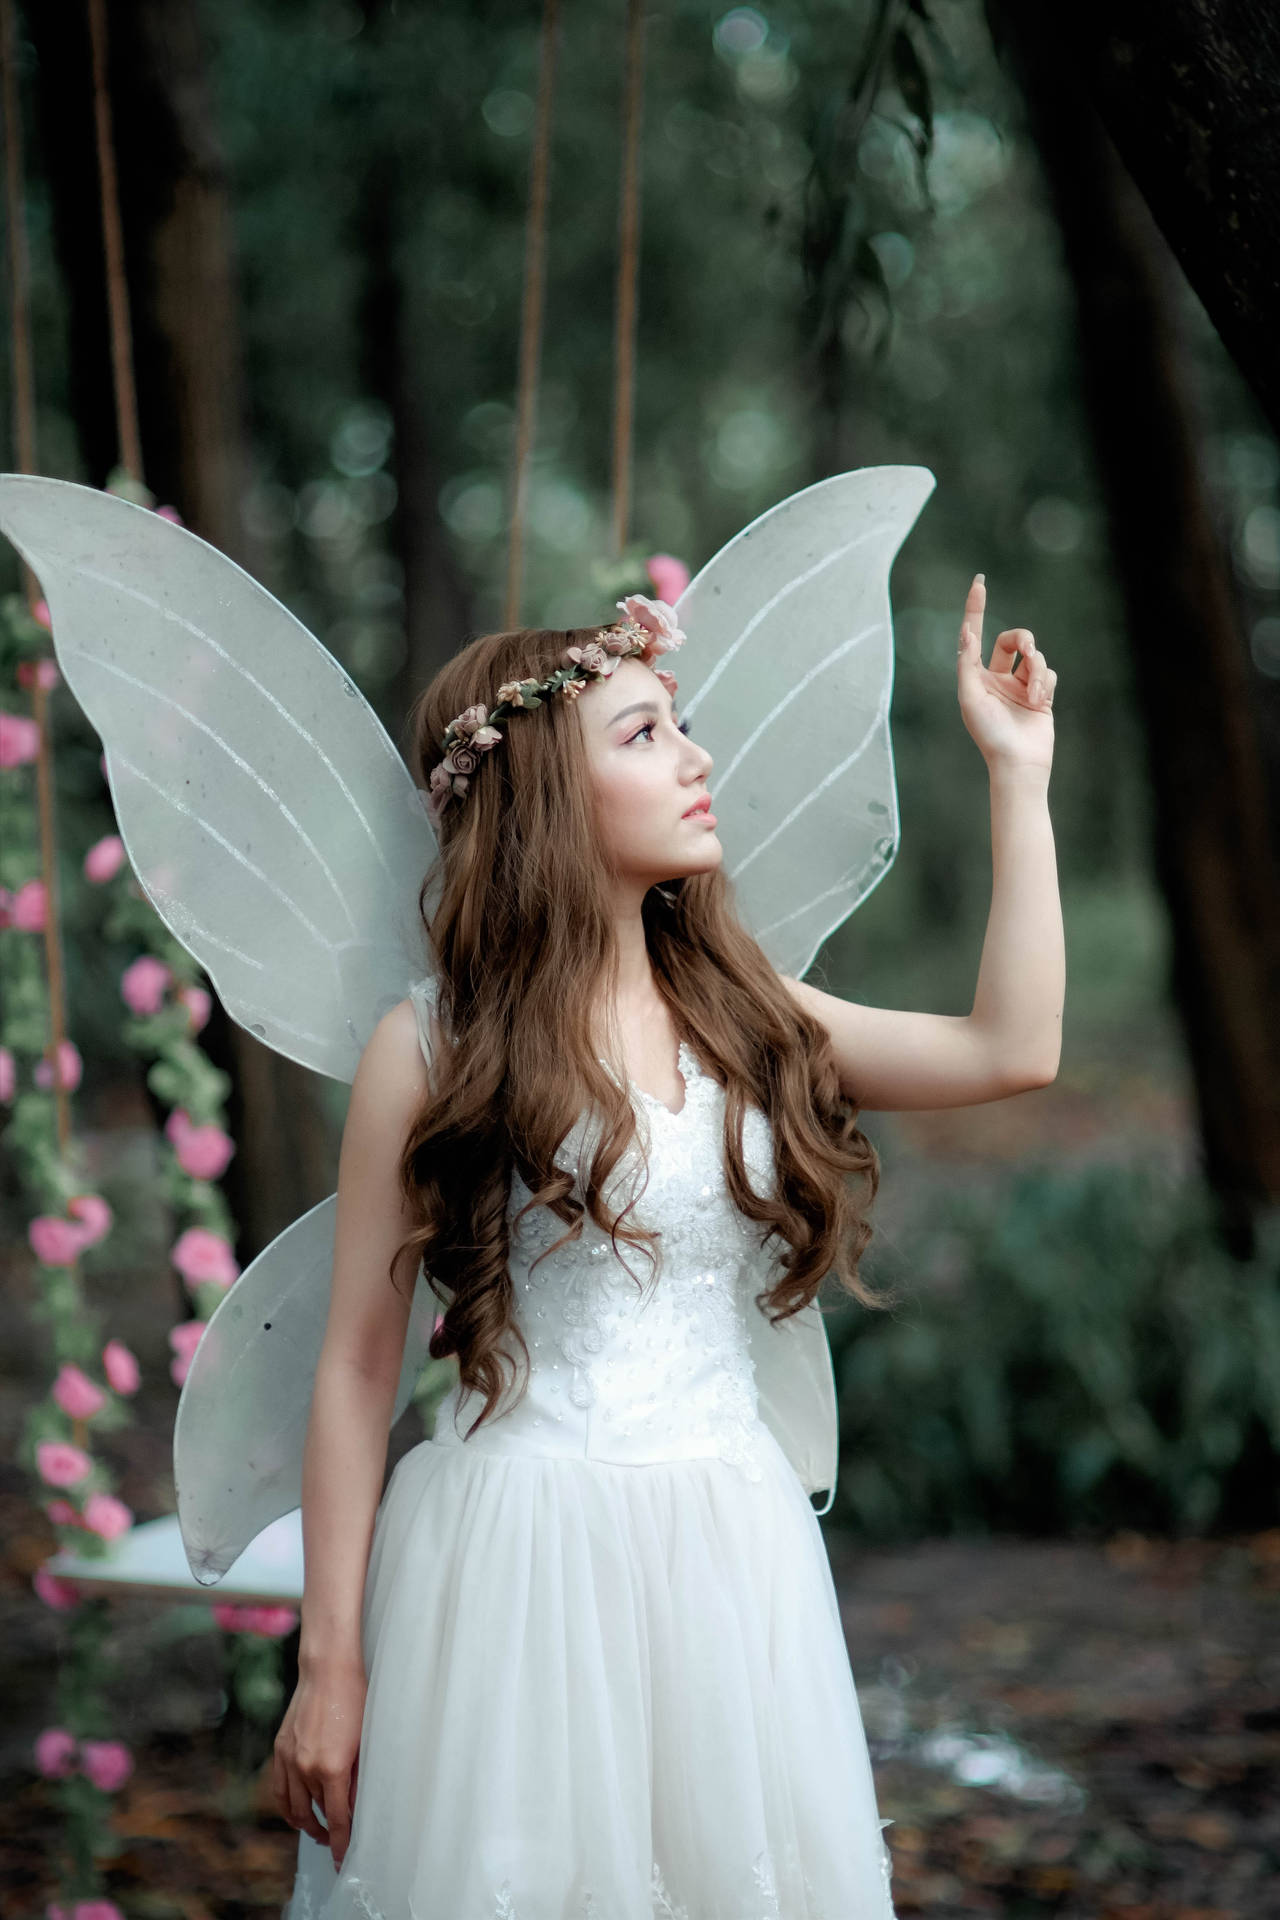 Cute Girl In Fairy Costume Background